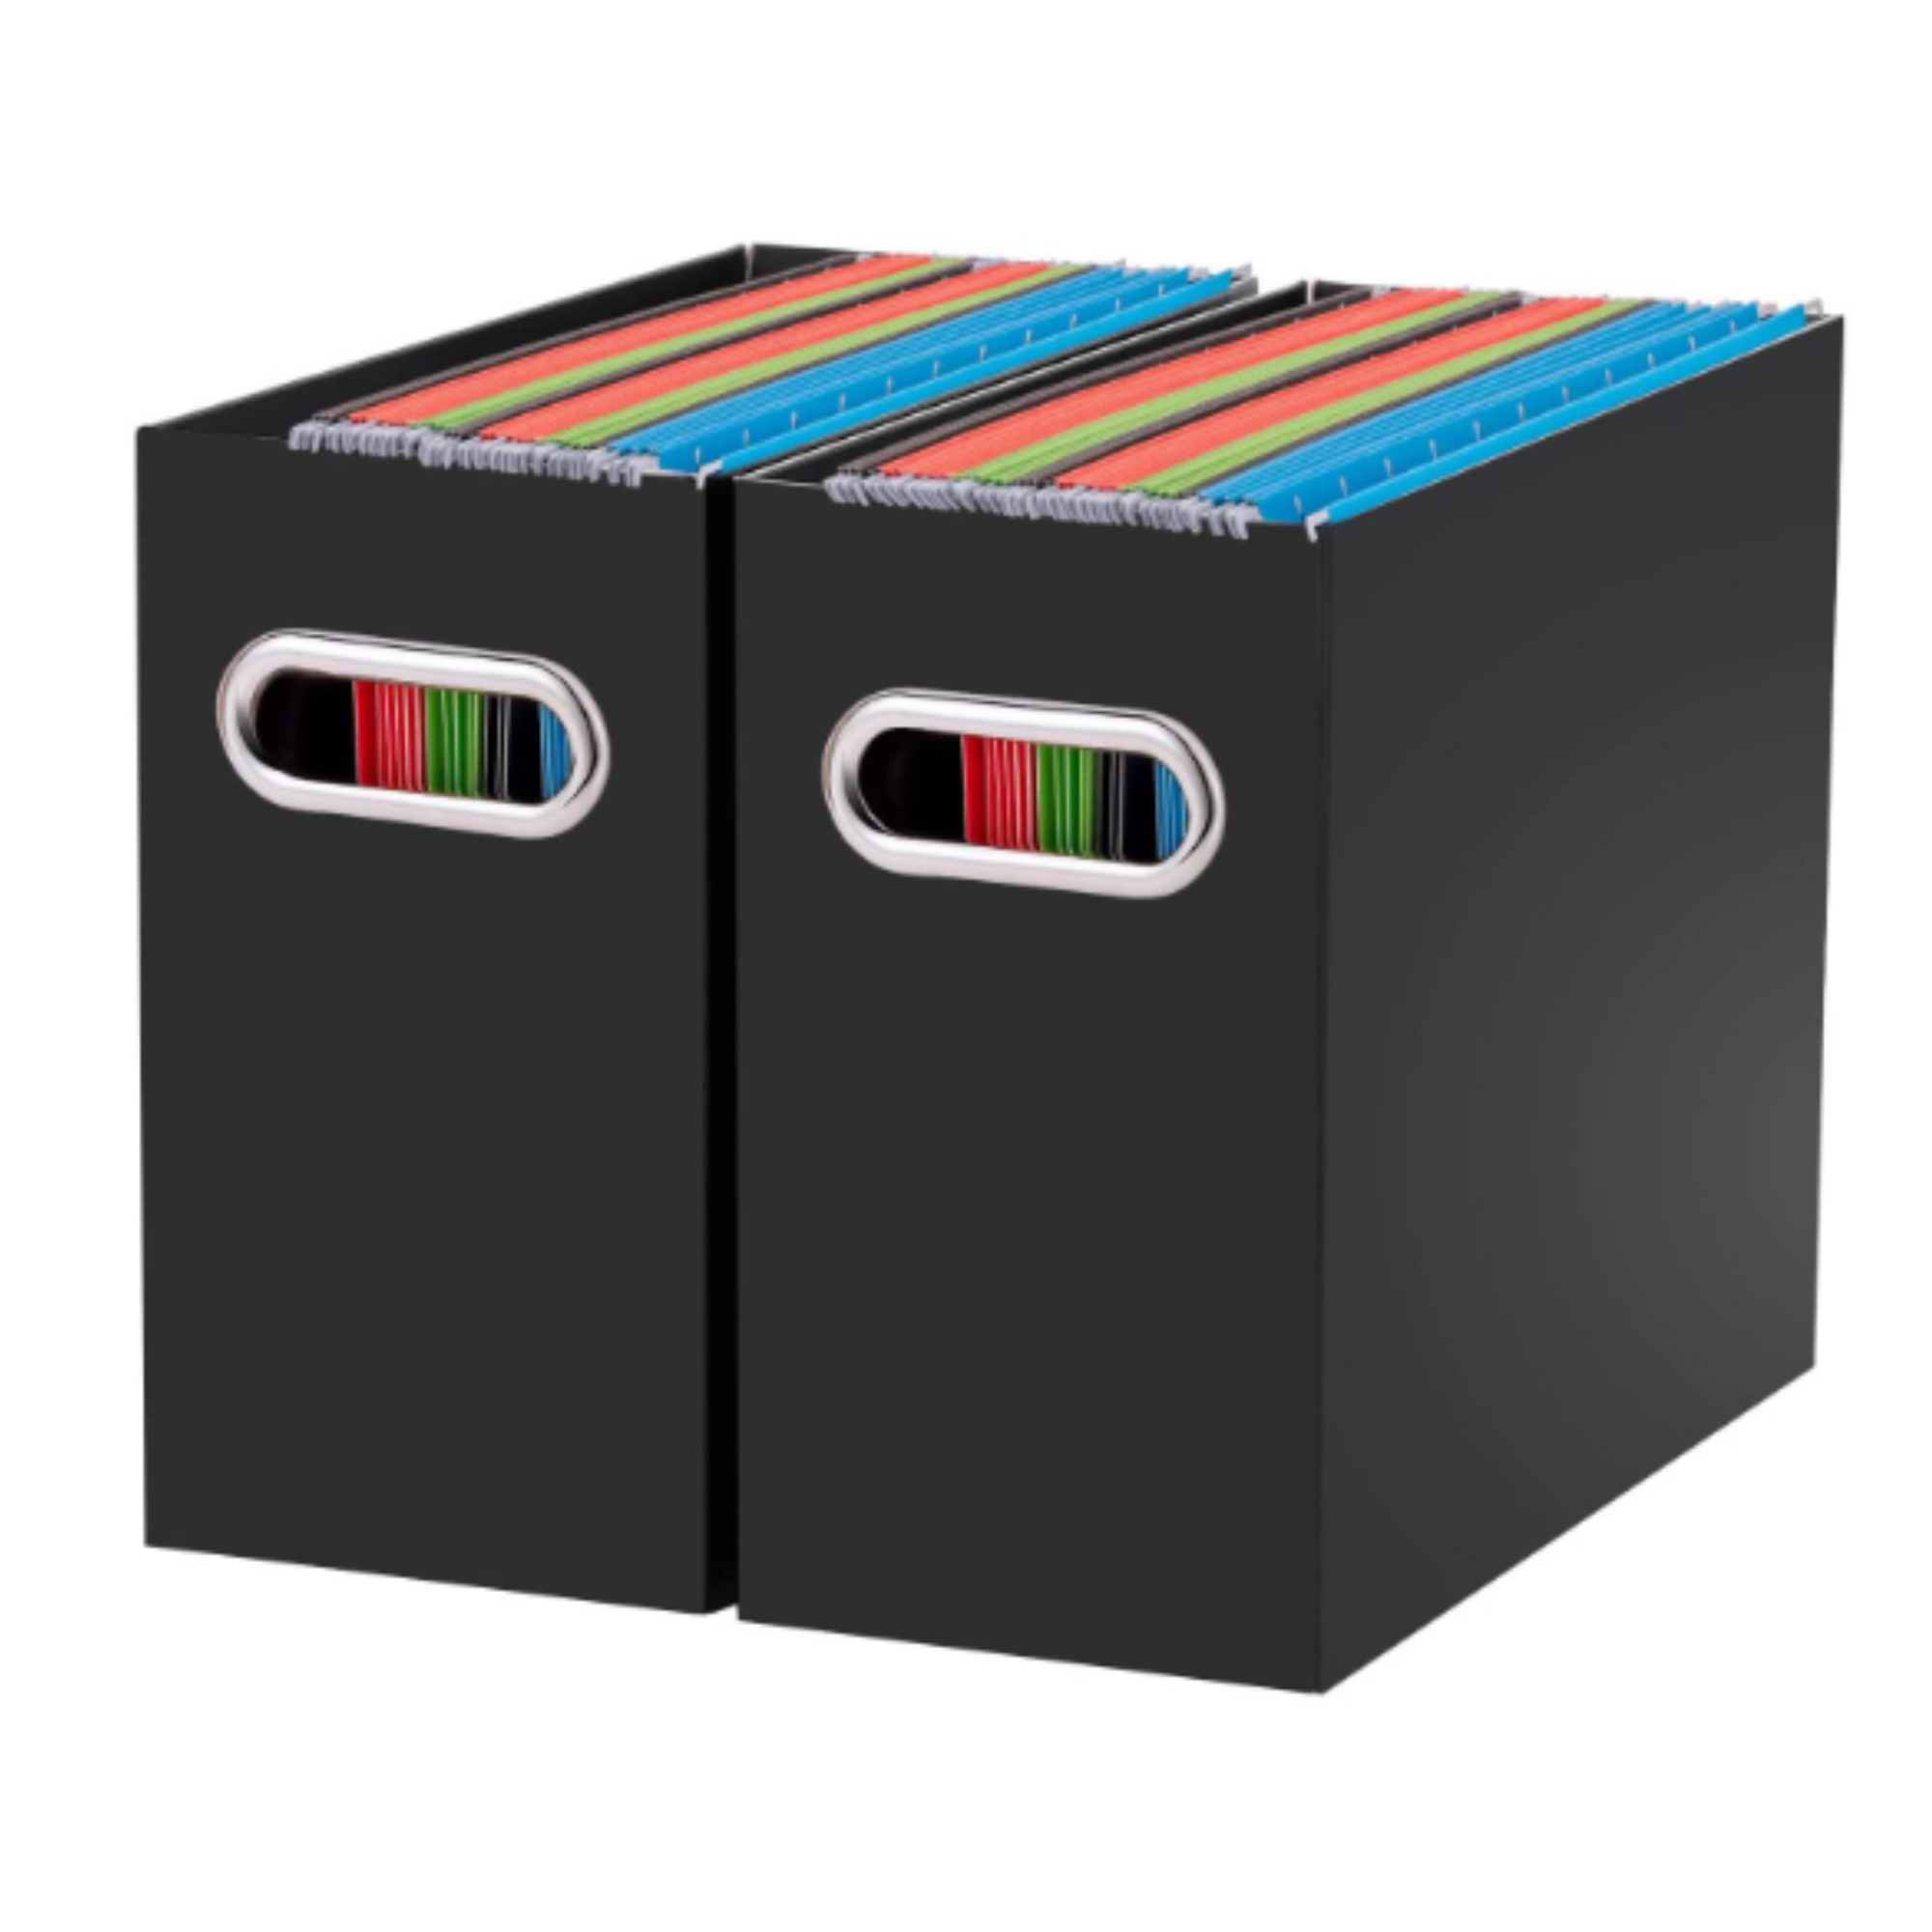 JSungo File Box with 5 Hanging Filing Folders, Document Organizer